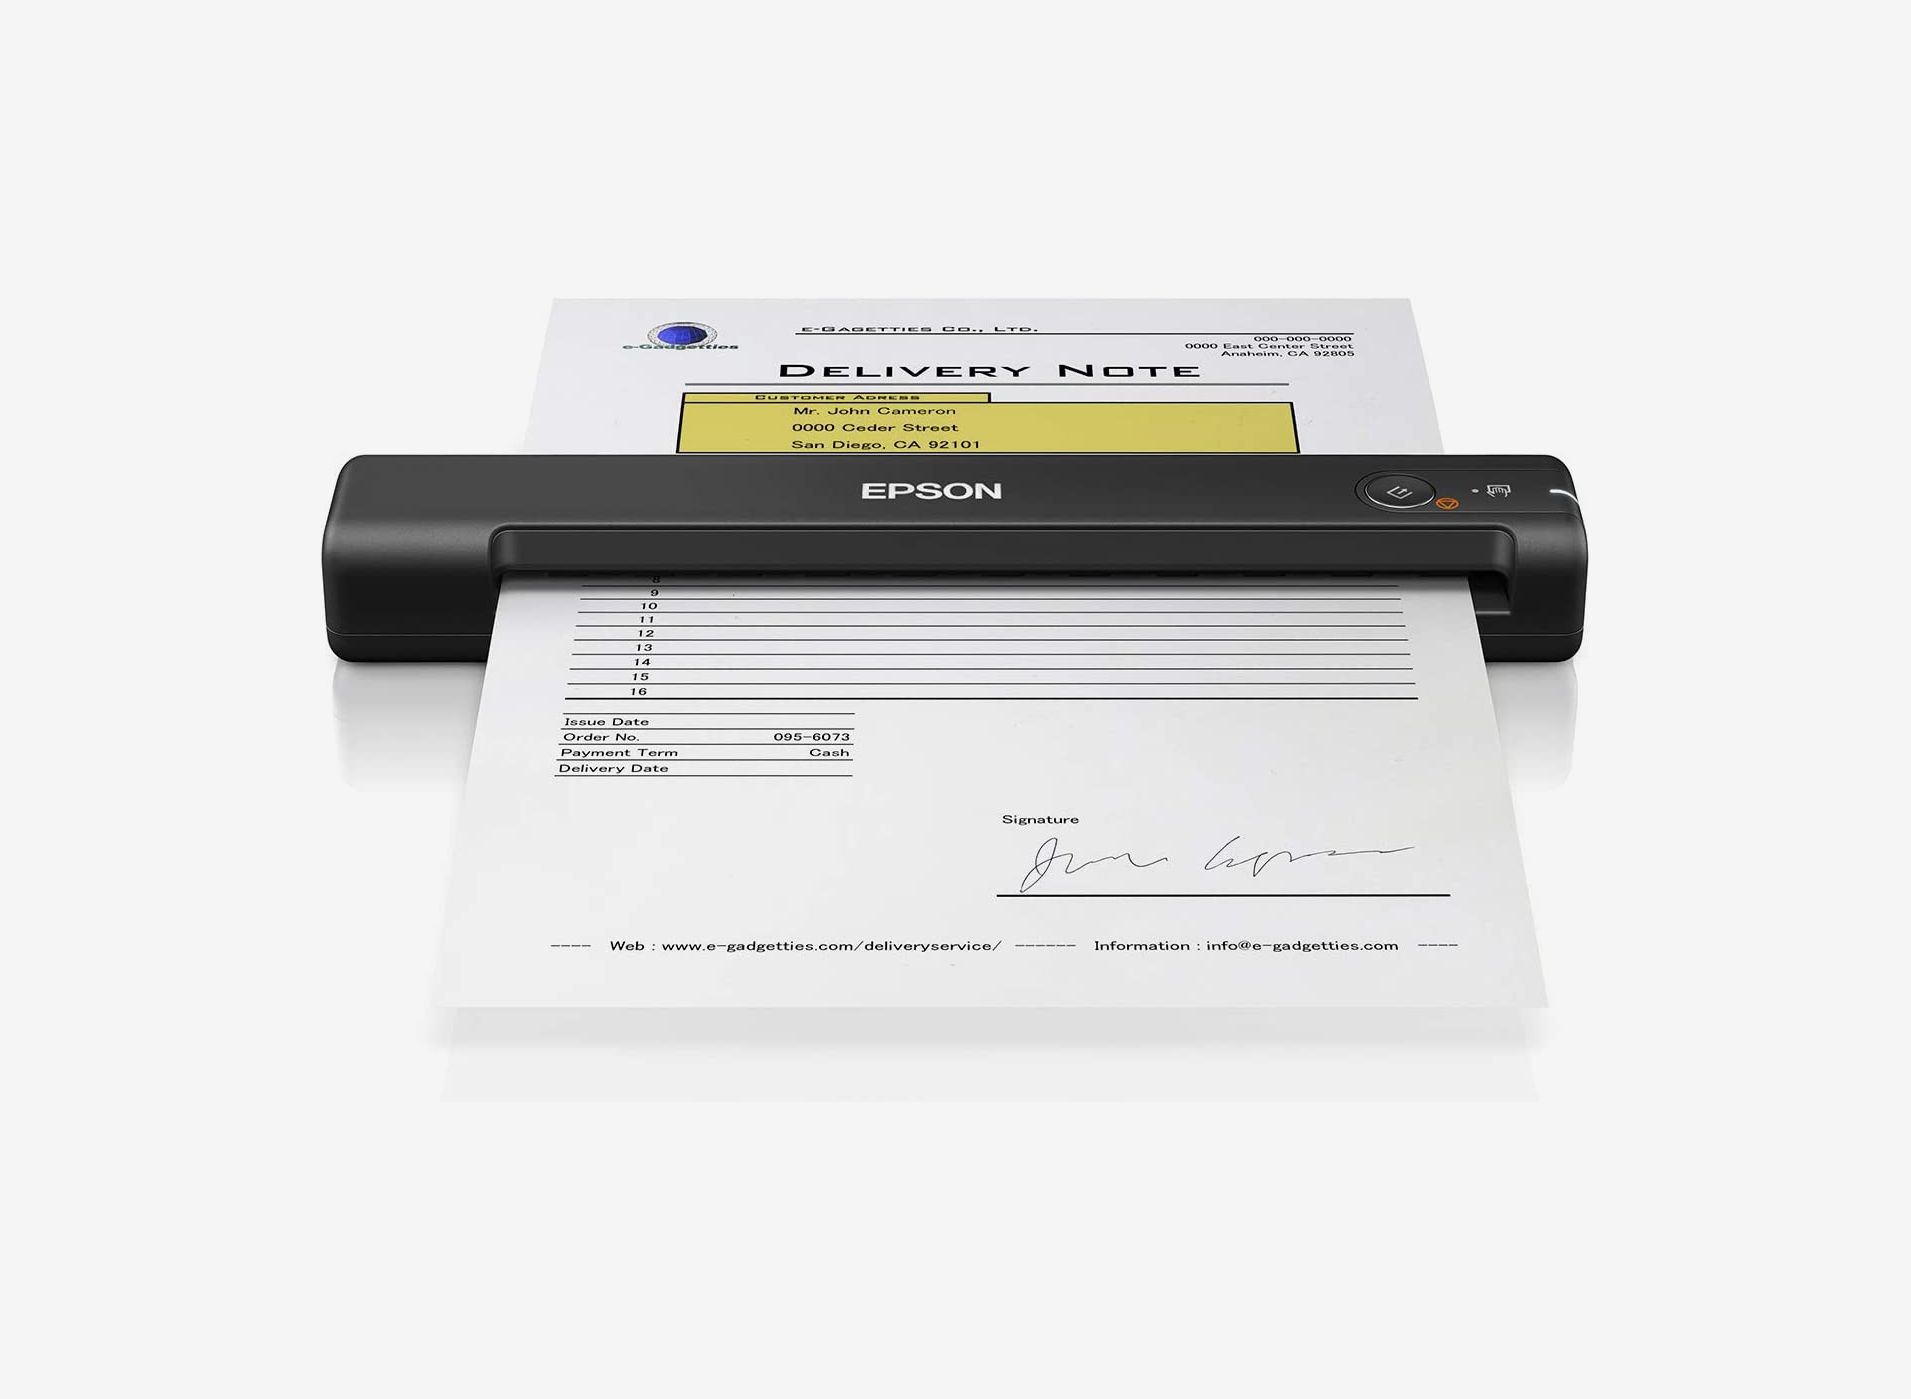 handheld document scanner reviews 2017